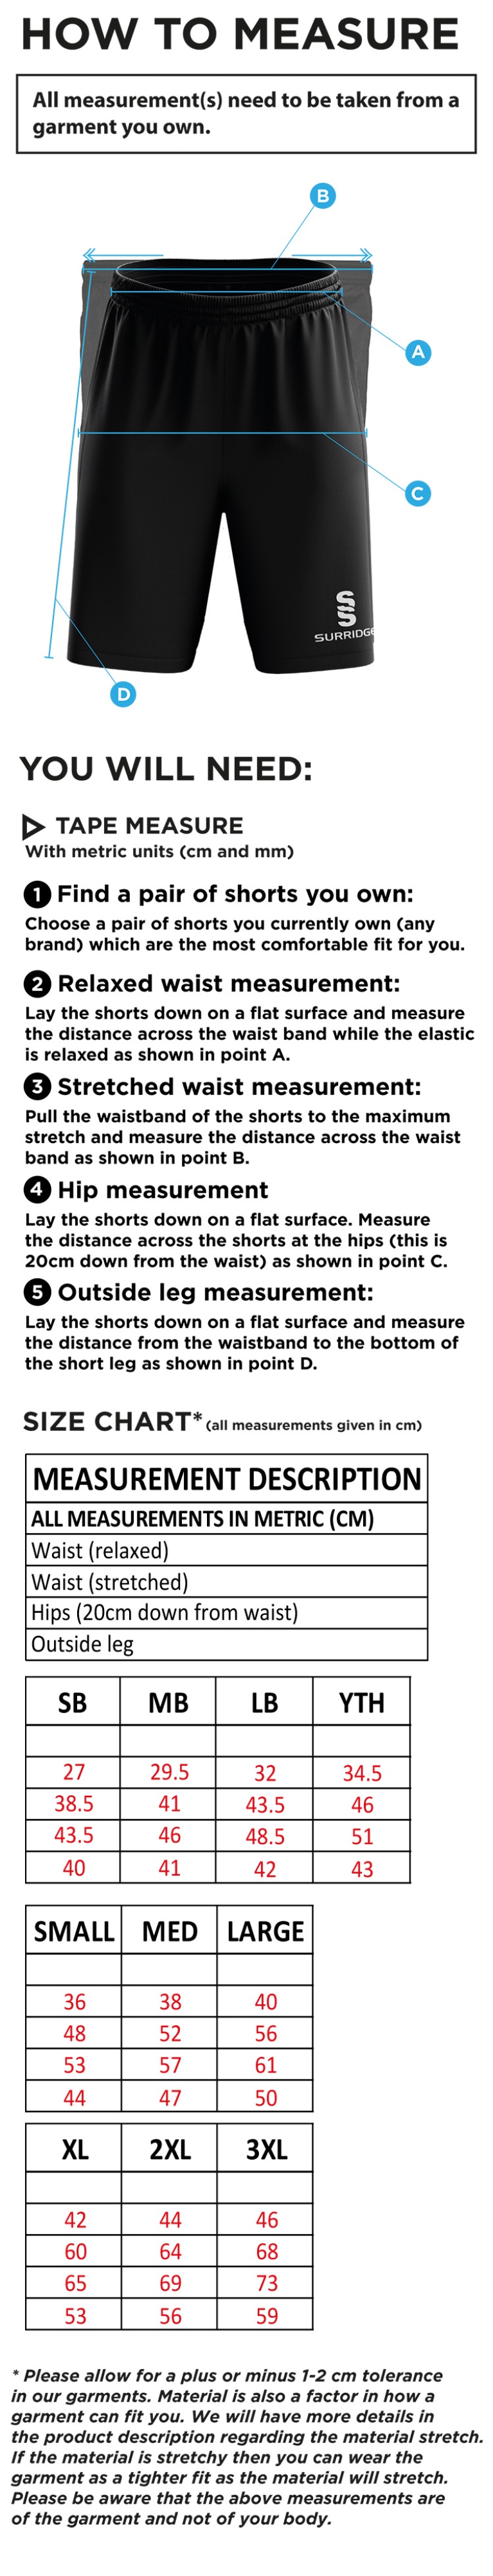 Penrith CC - Blade Shorts - Size Guide